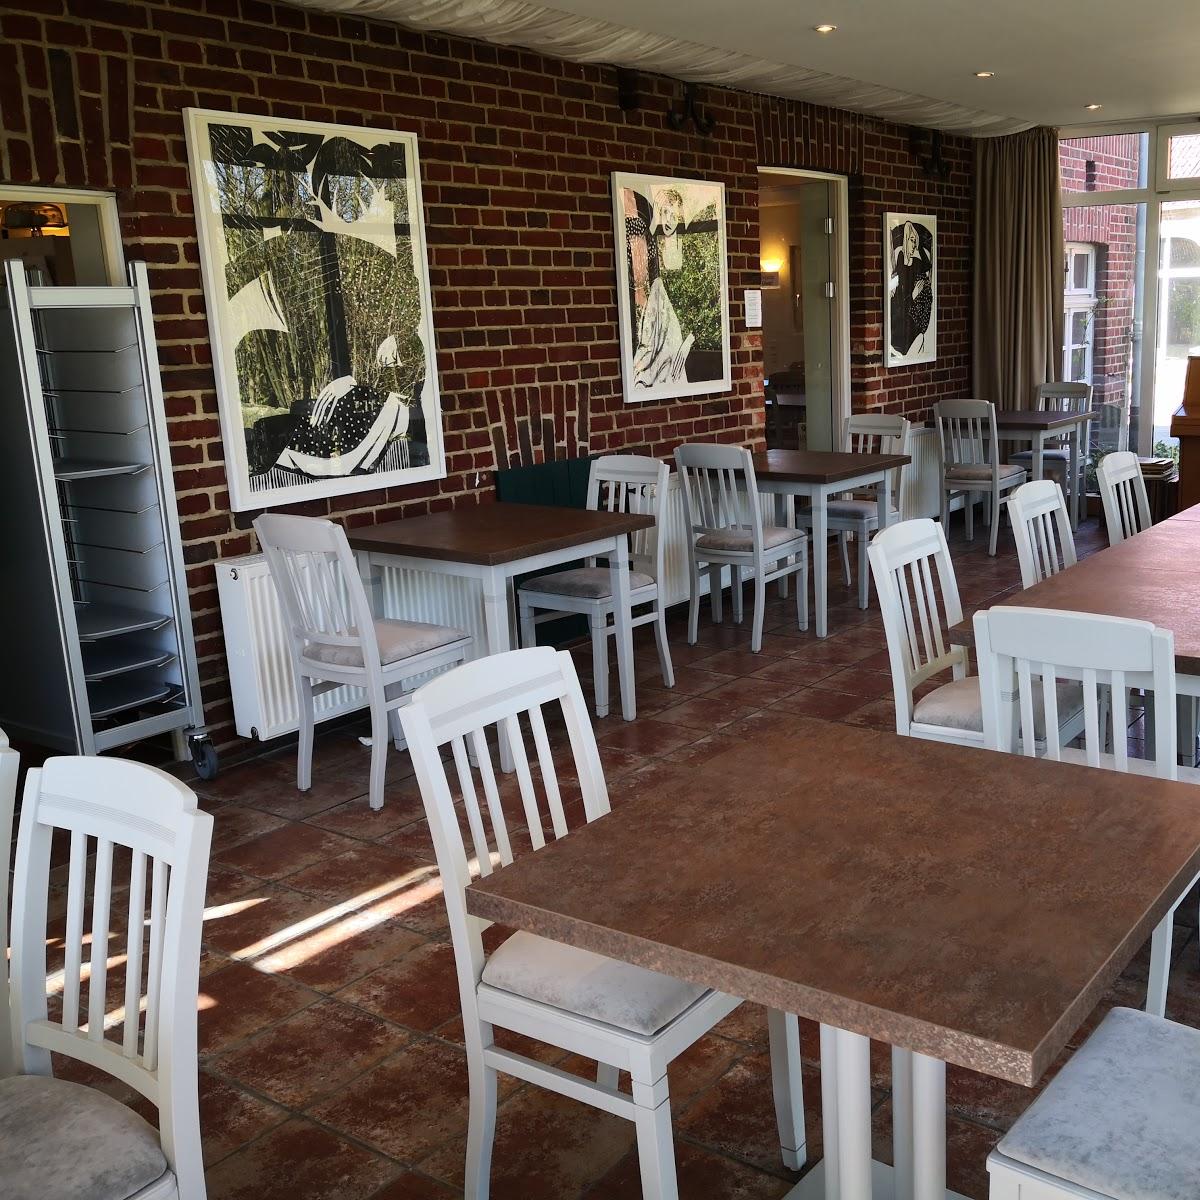 Restaurant "café arte im Sandsteinmuseum" in Havixbeck